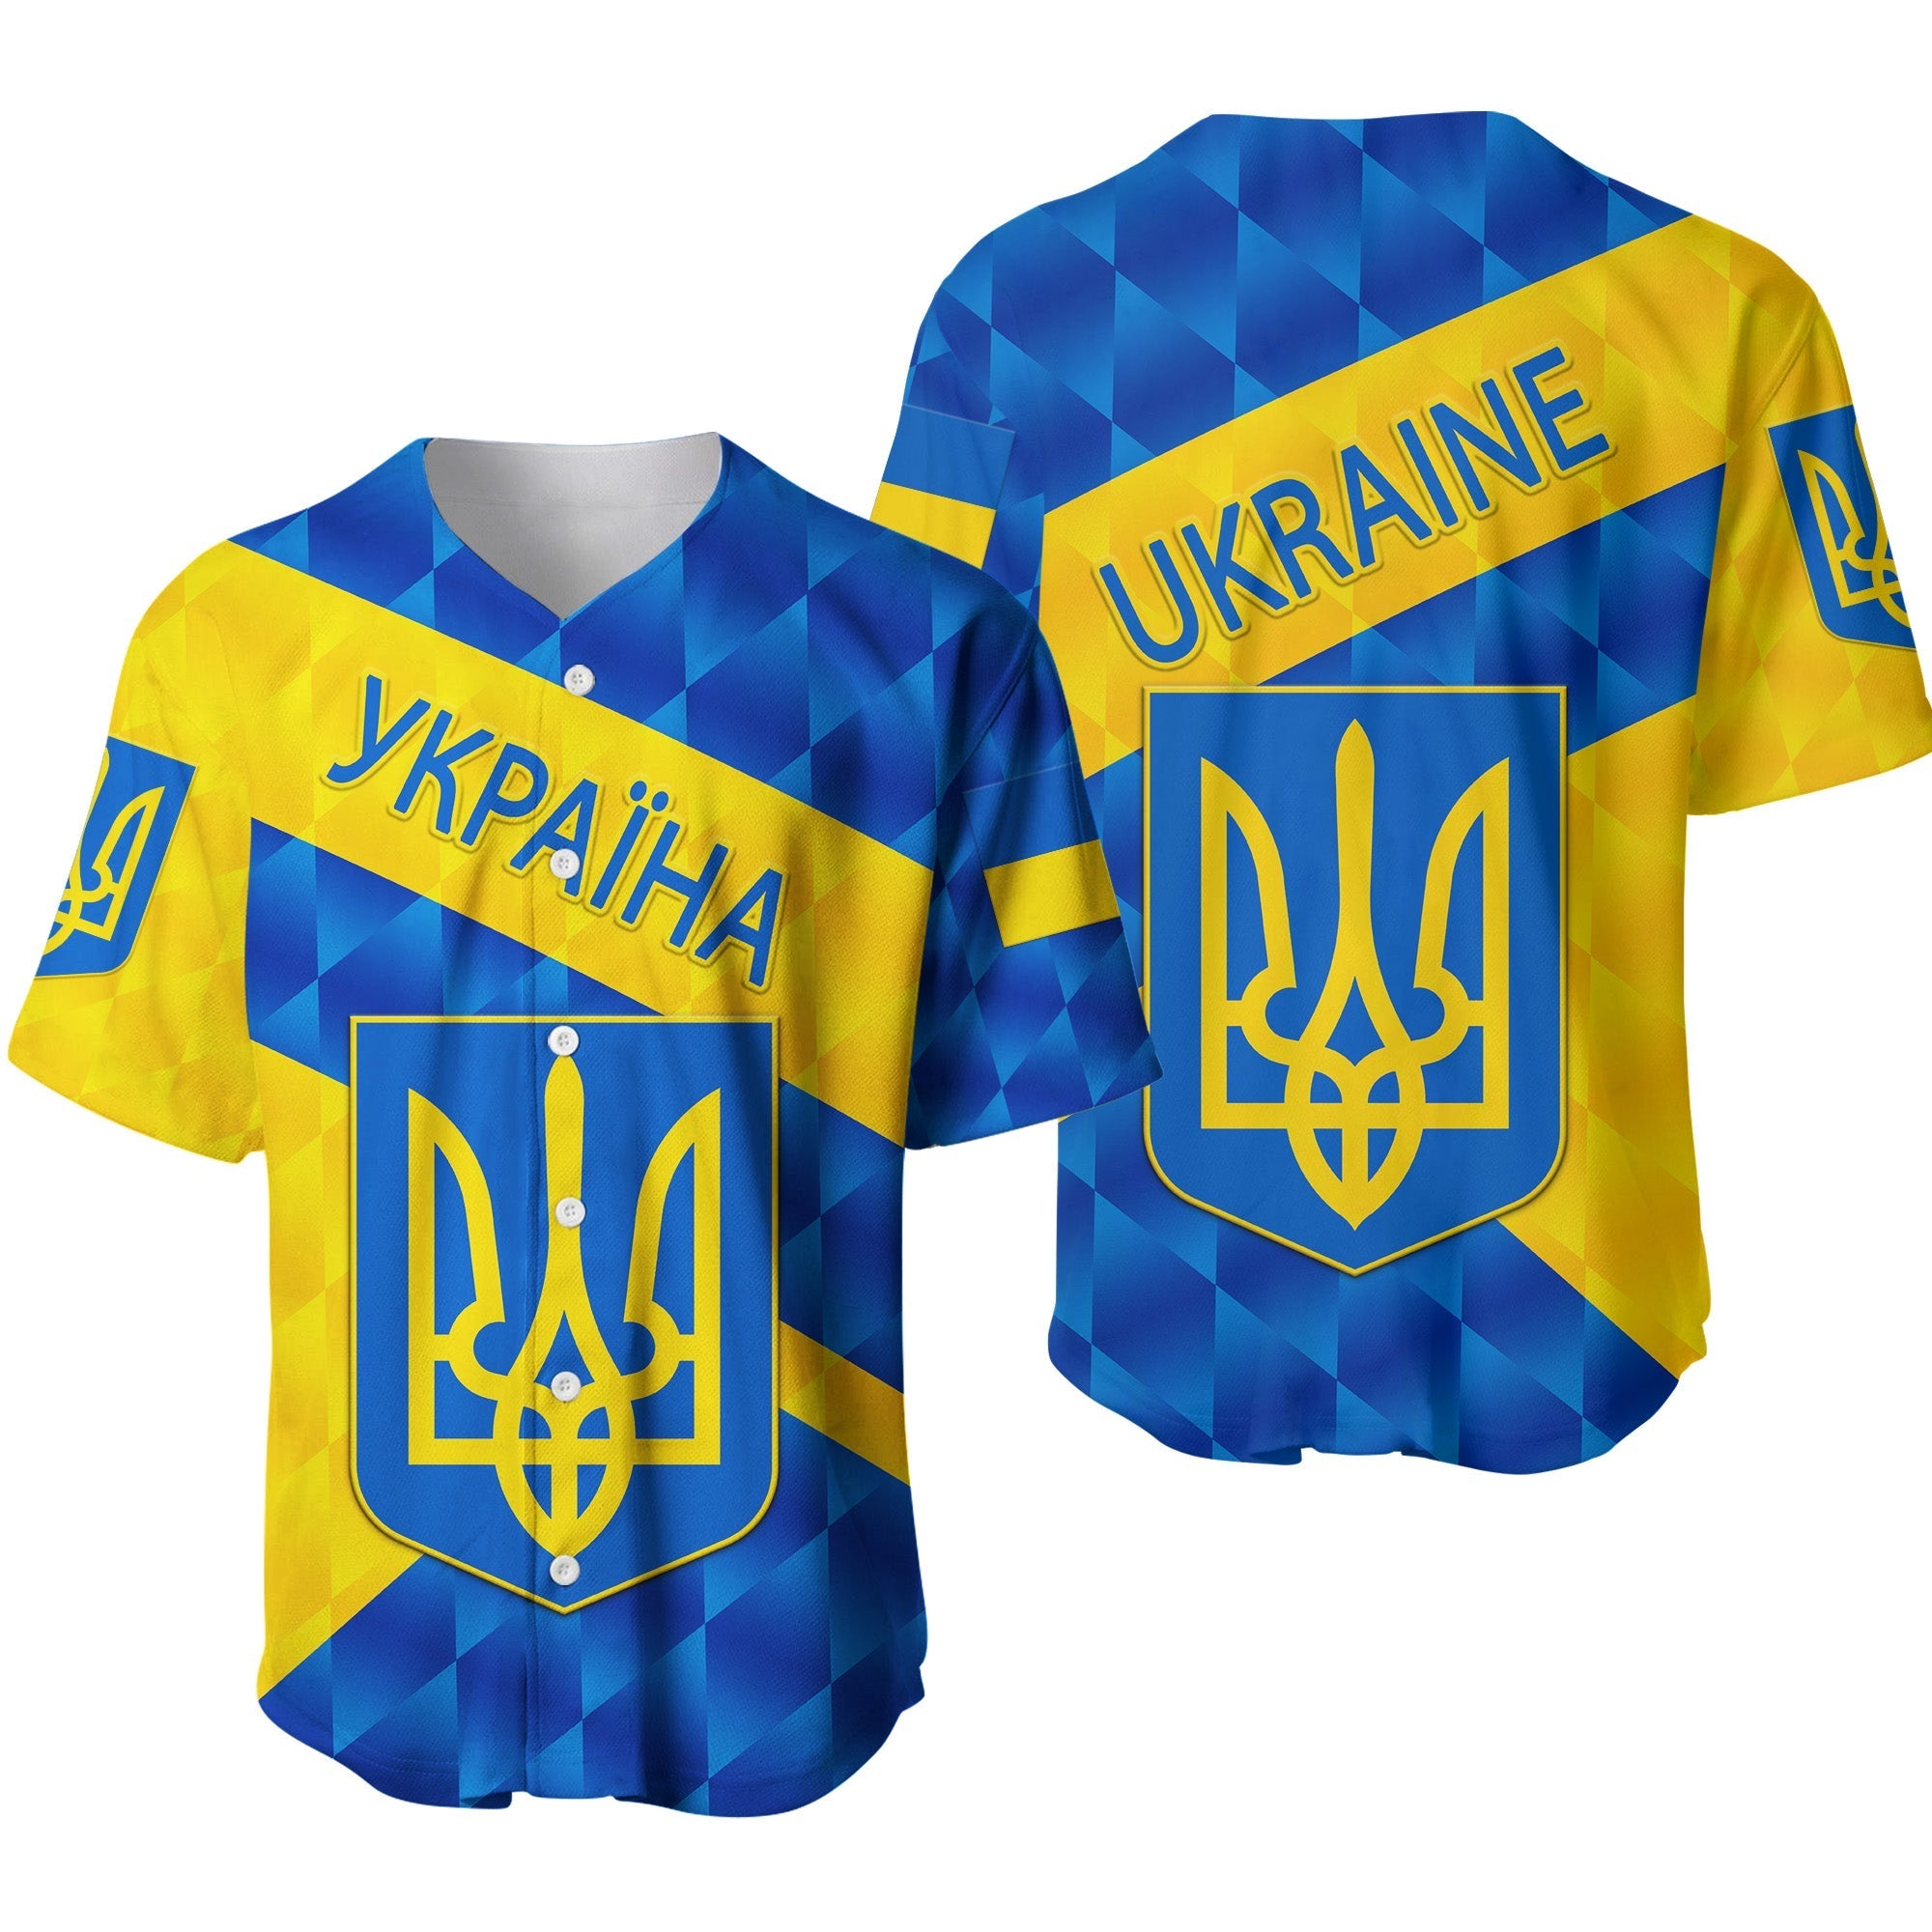 ukraine-baseball-jersey-sporty-style